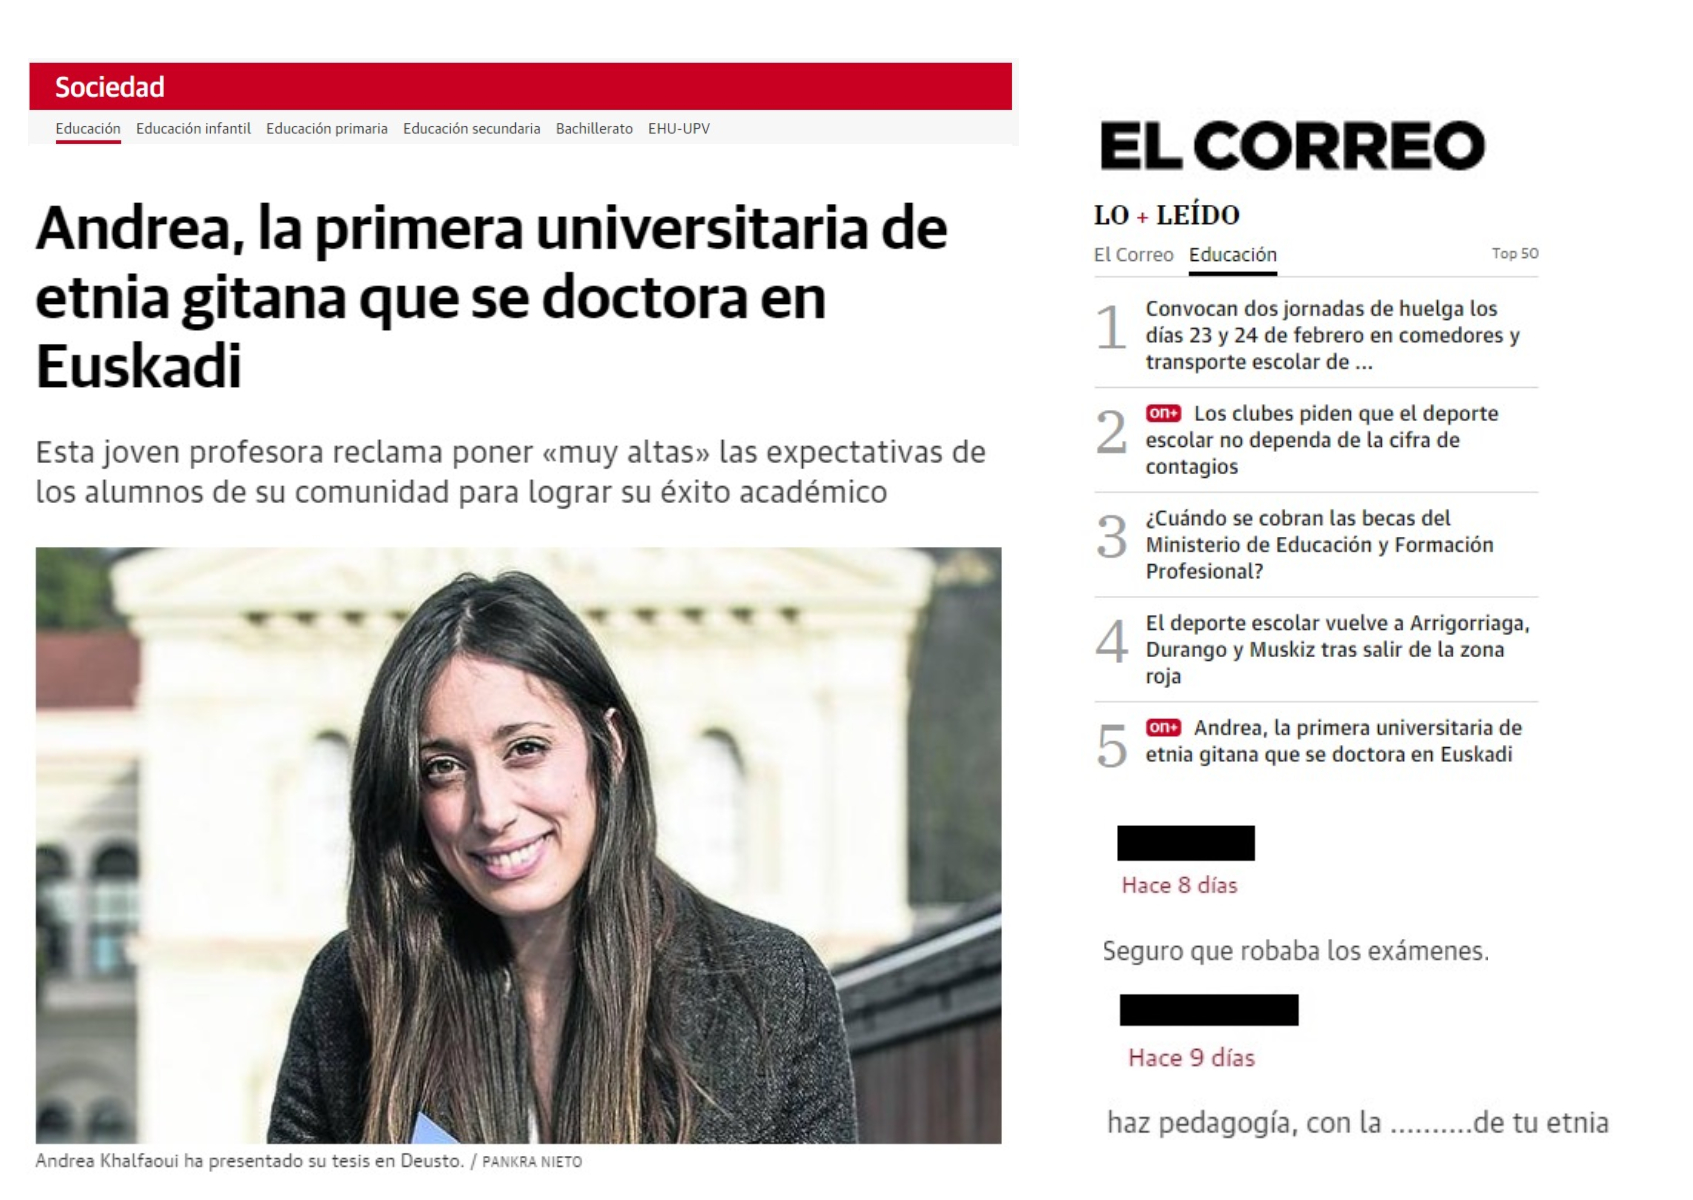 Andrea-Khalfaoui-gitana-universidad-deusto-amuge-mujeres-feministas-bilbao-correo-doctorado-racismo